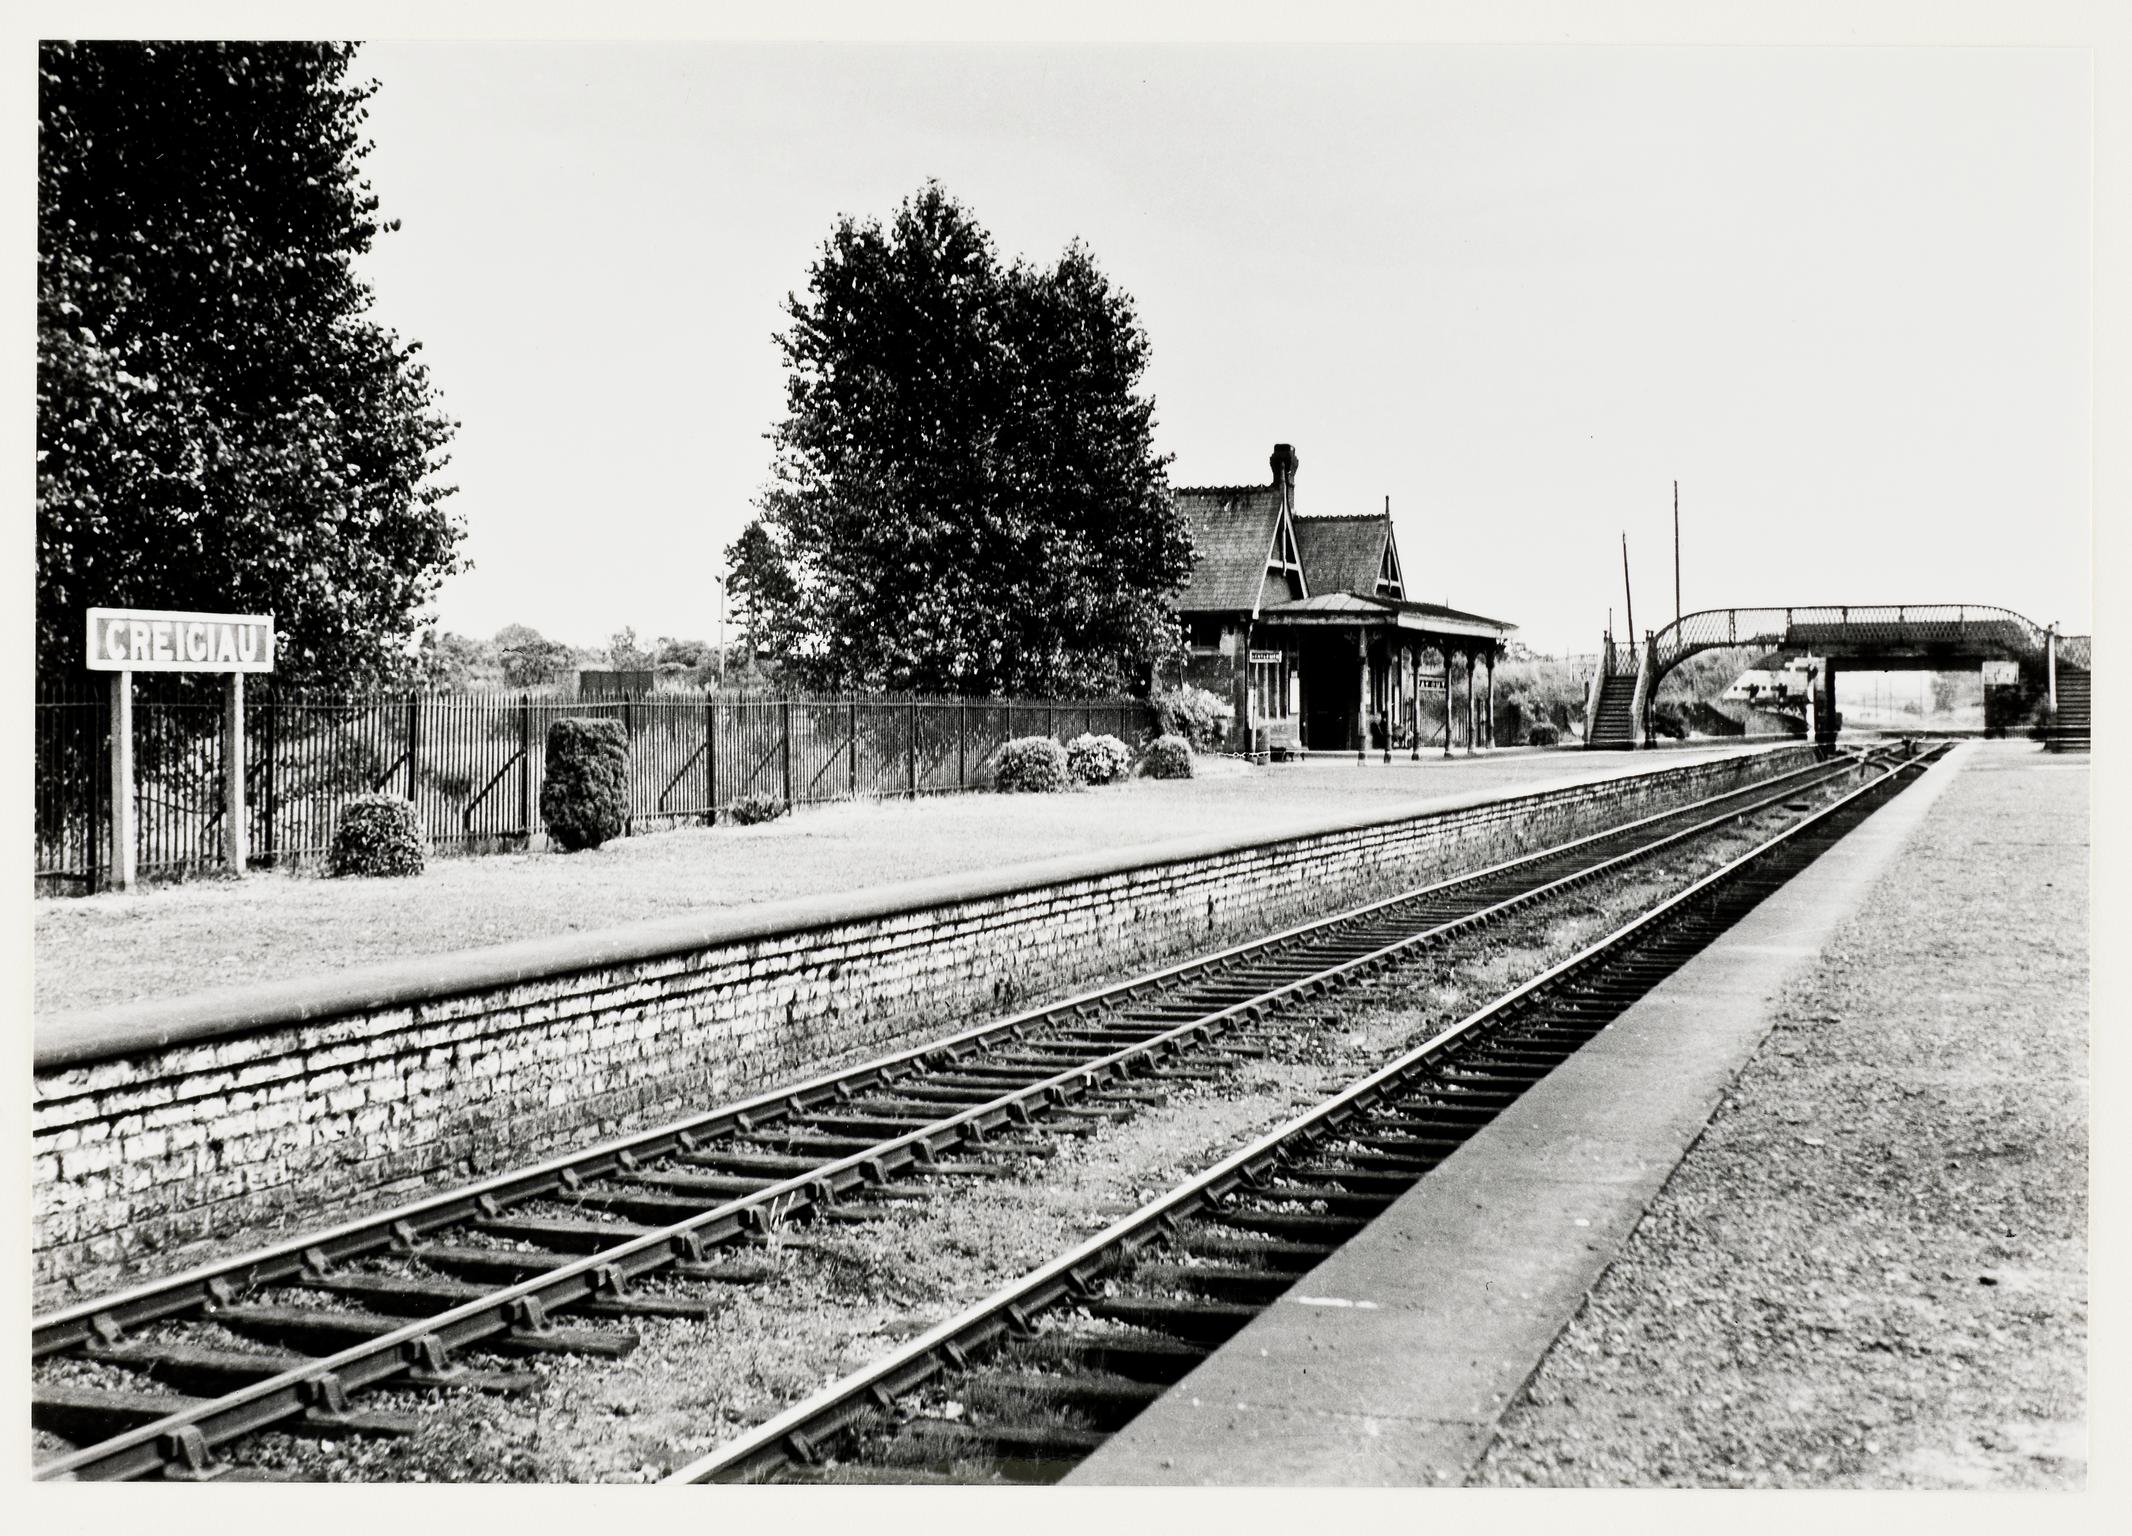 Creigiau railway station, photograph